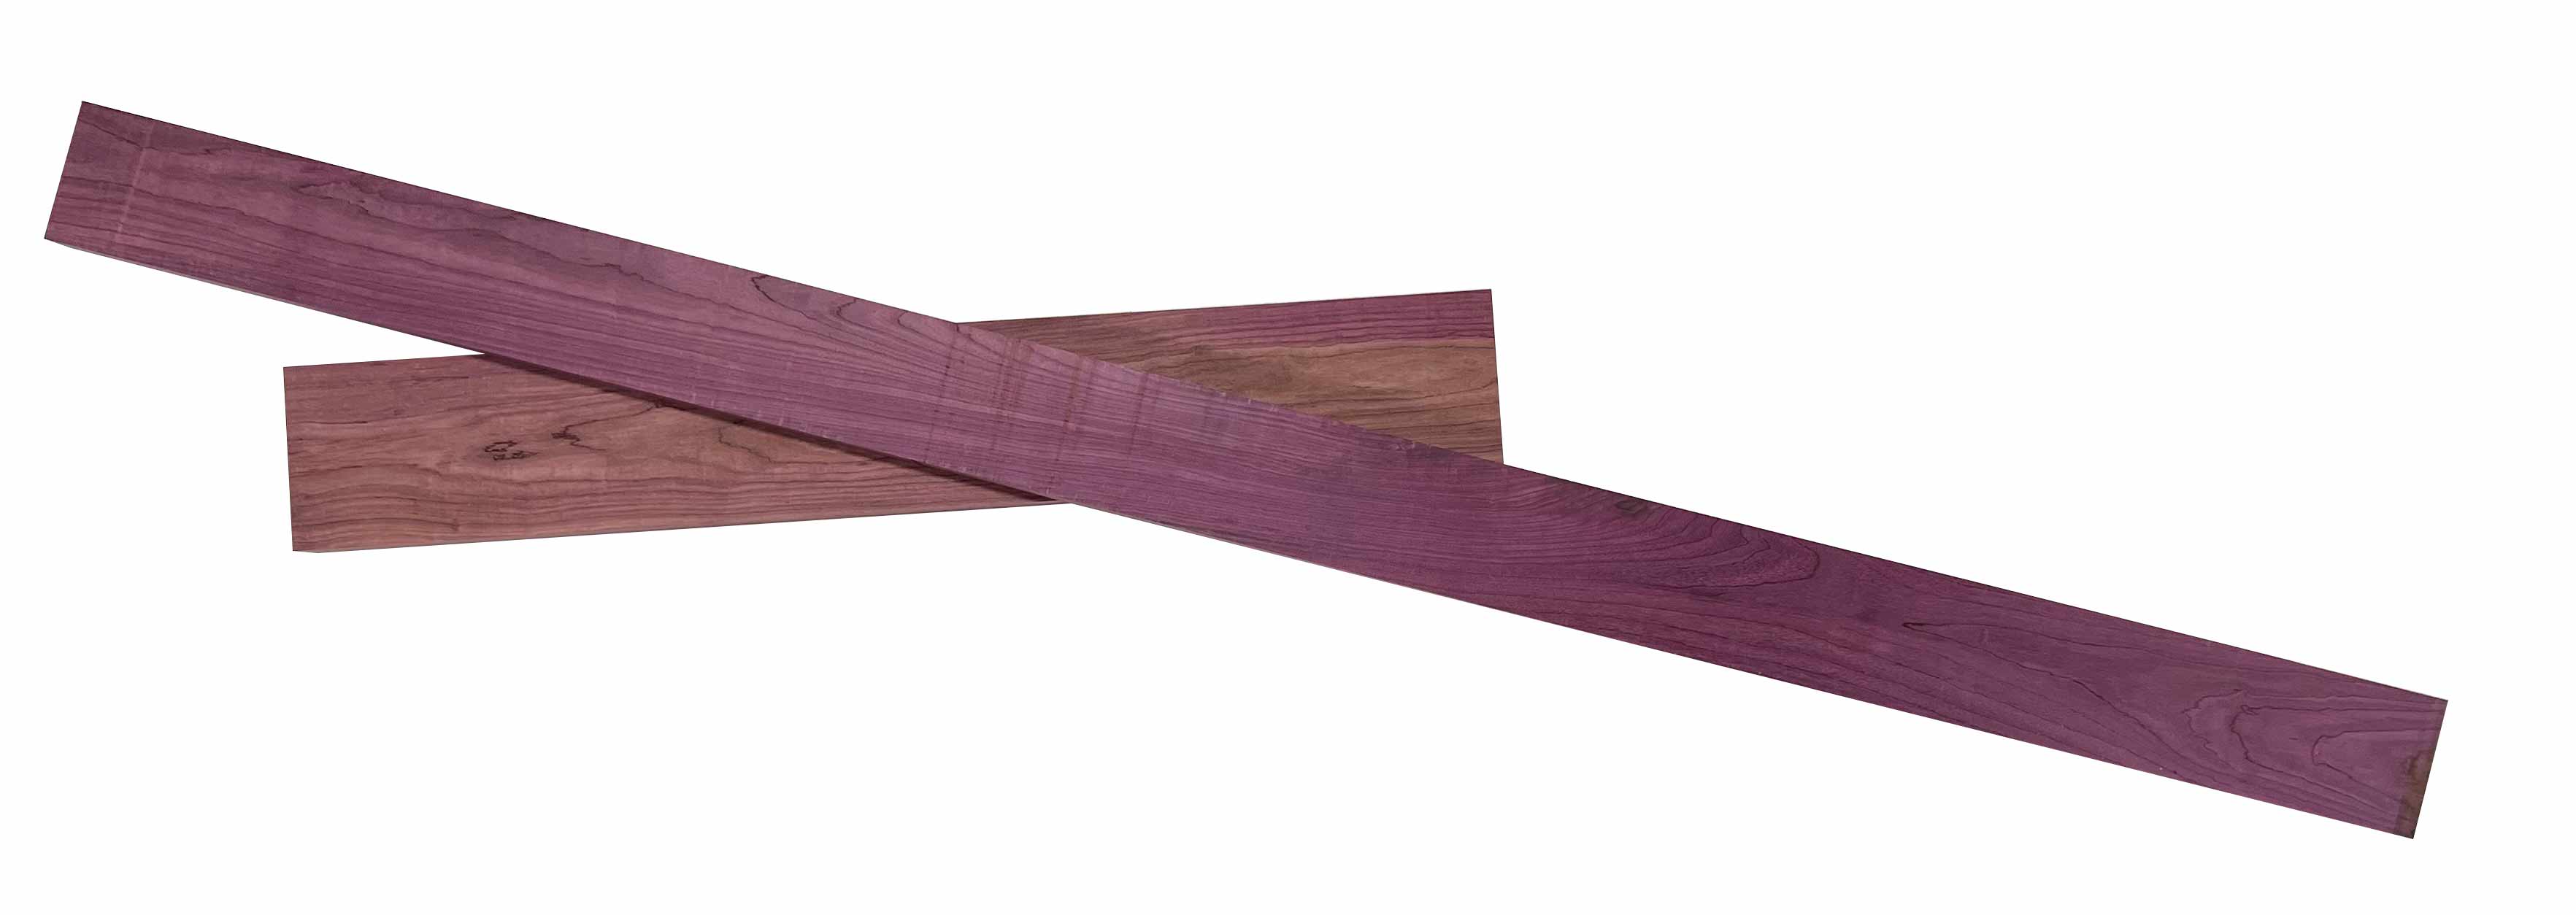 Premium Purpleheart 8/4 Lumber - Exotic Wood Zone - Buy online Across USA 